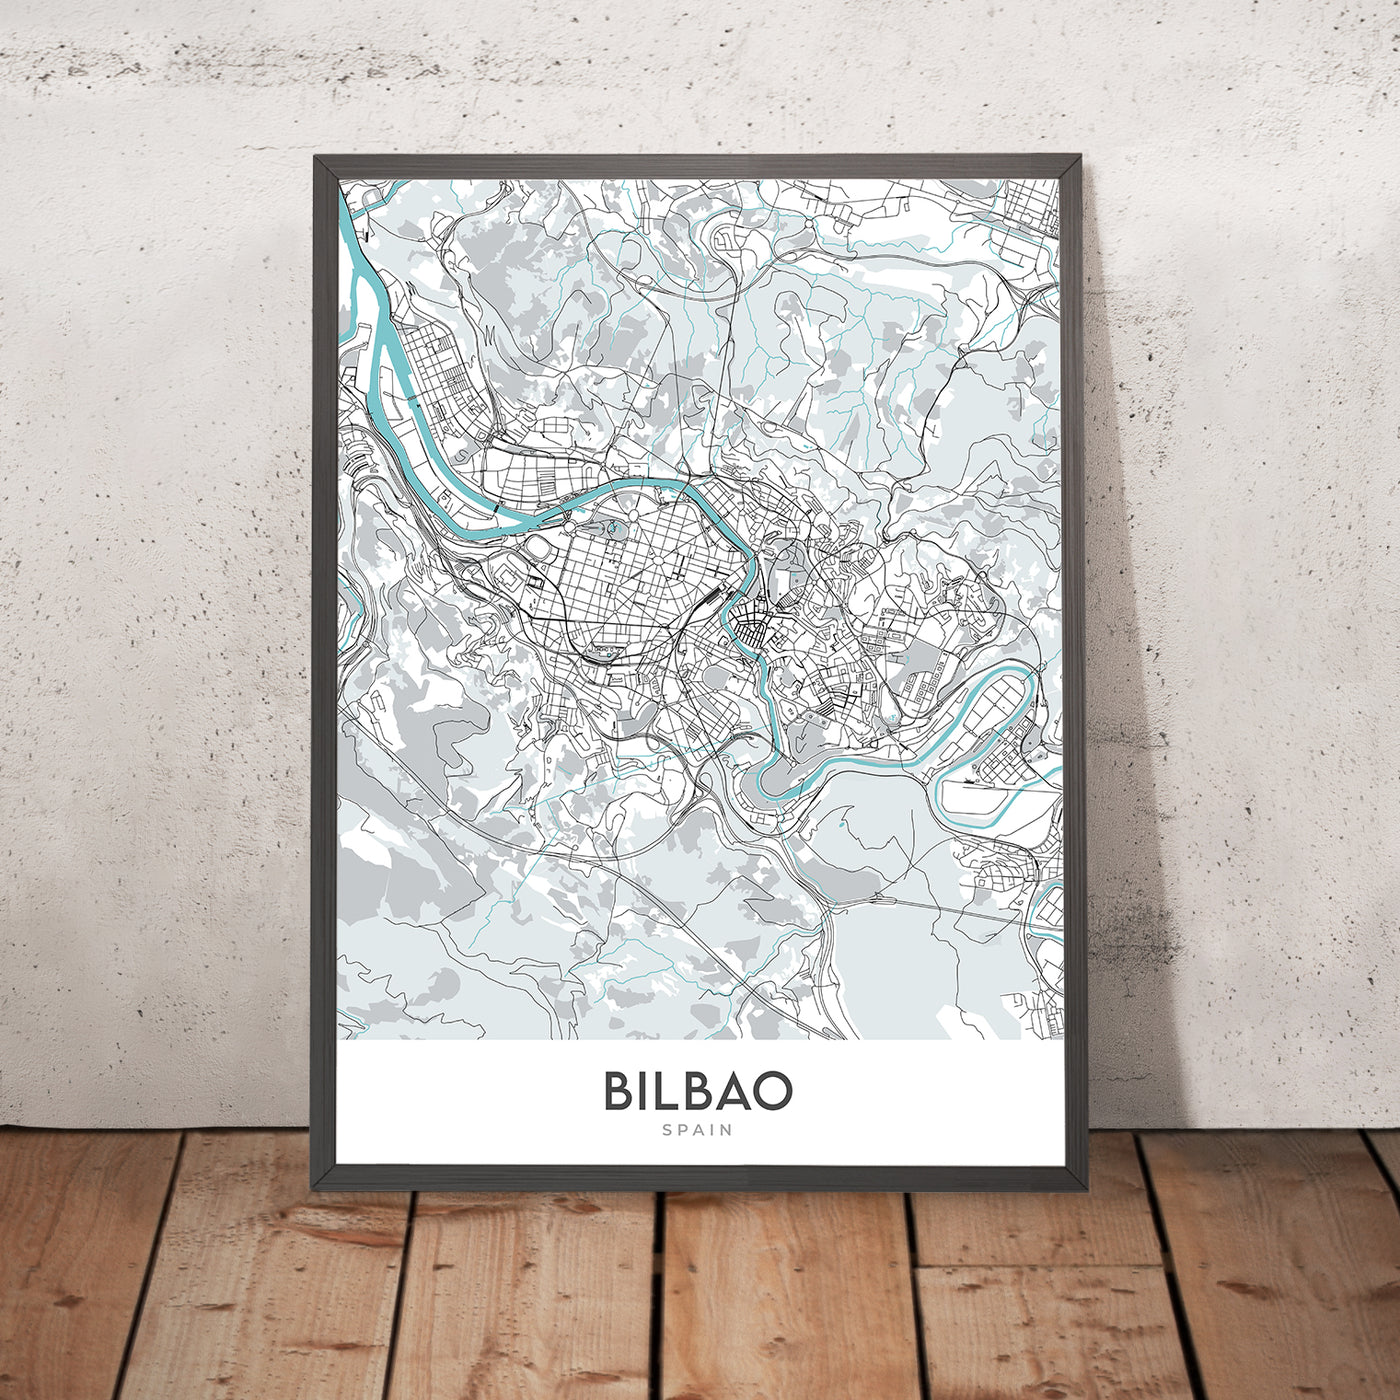 Plan de la ville moderne de Bilbao, Espagne : Guggenheim, Casco Viejo, Ensanche, Arriaga, Plaza Moyúa